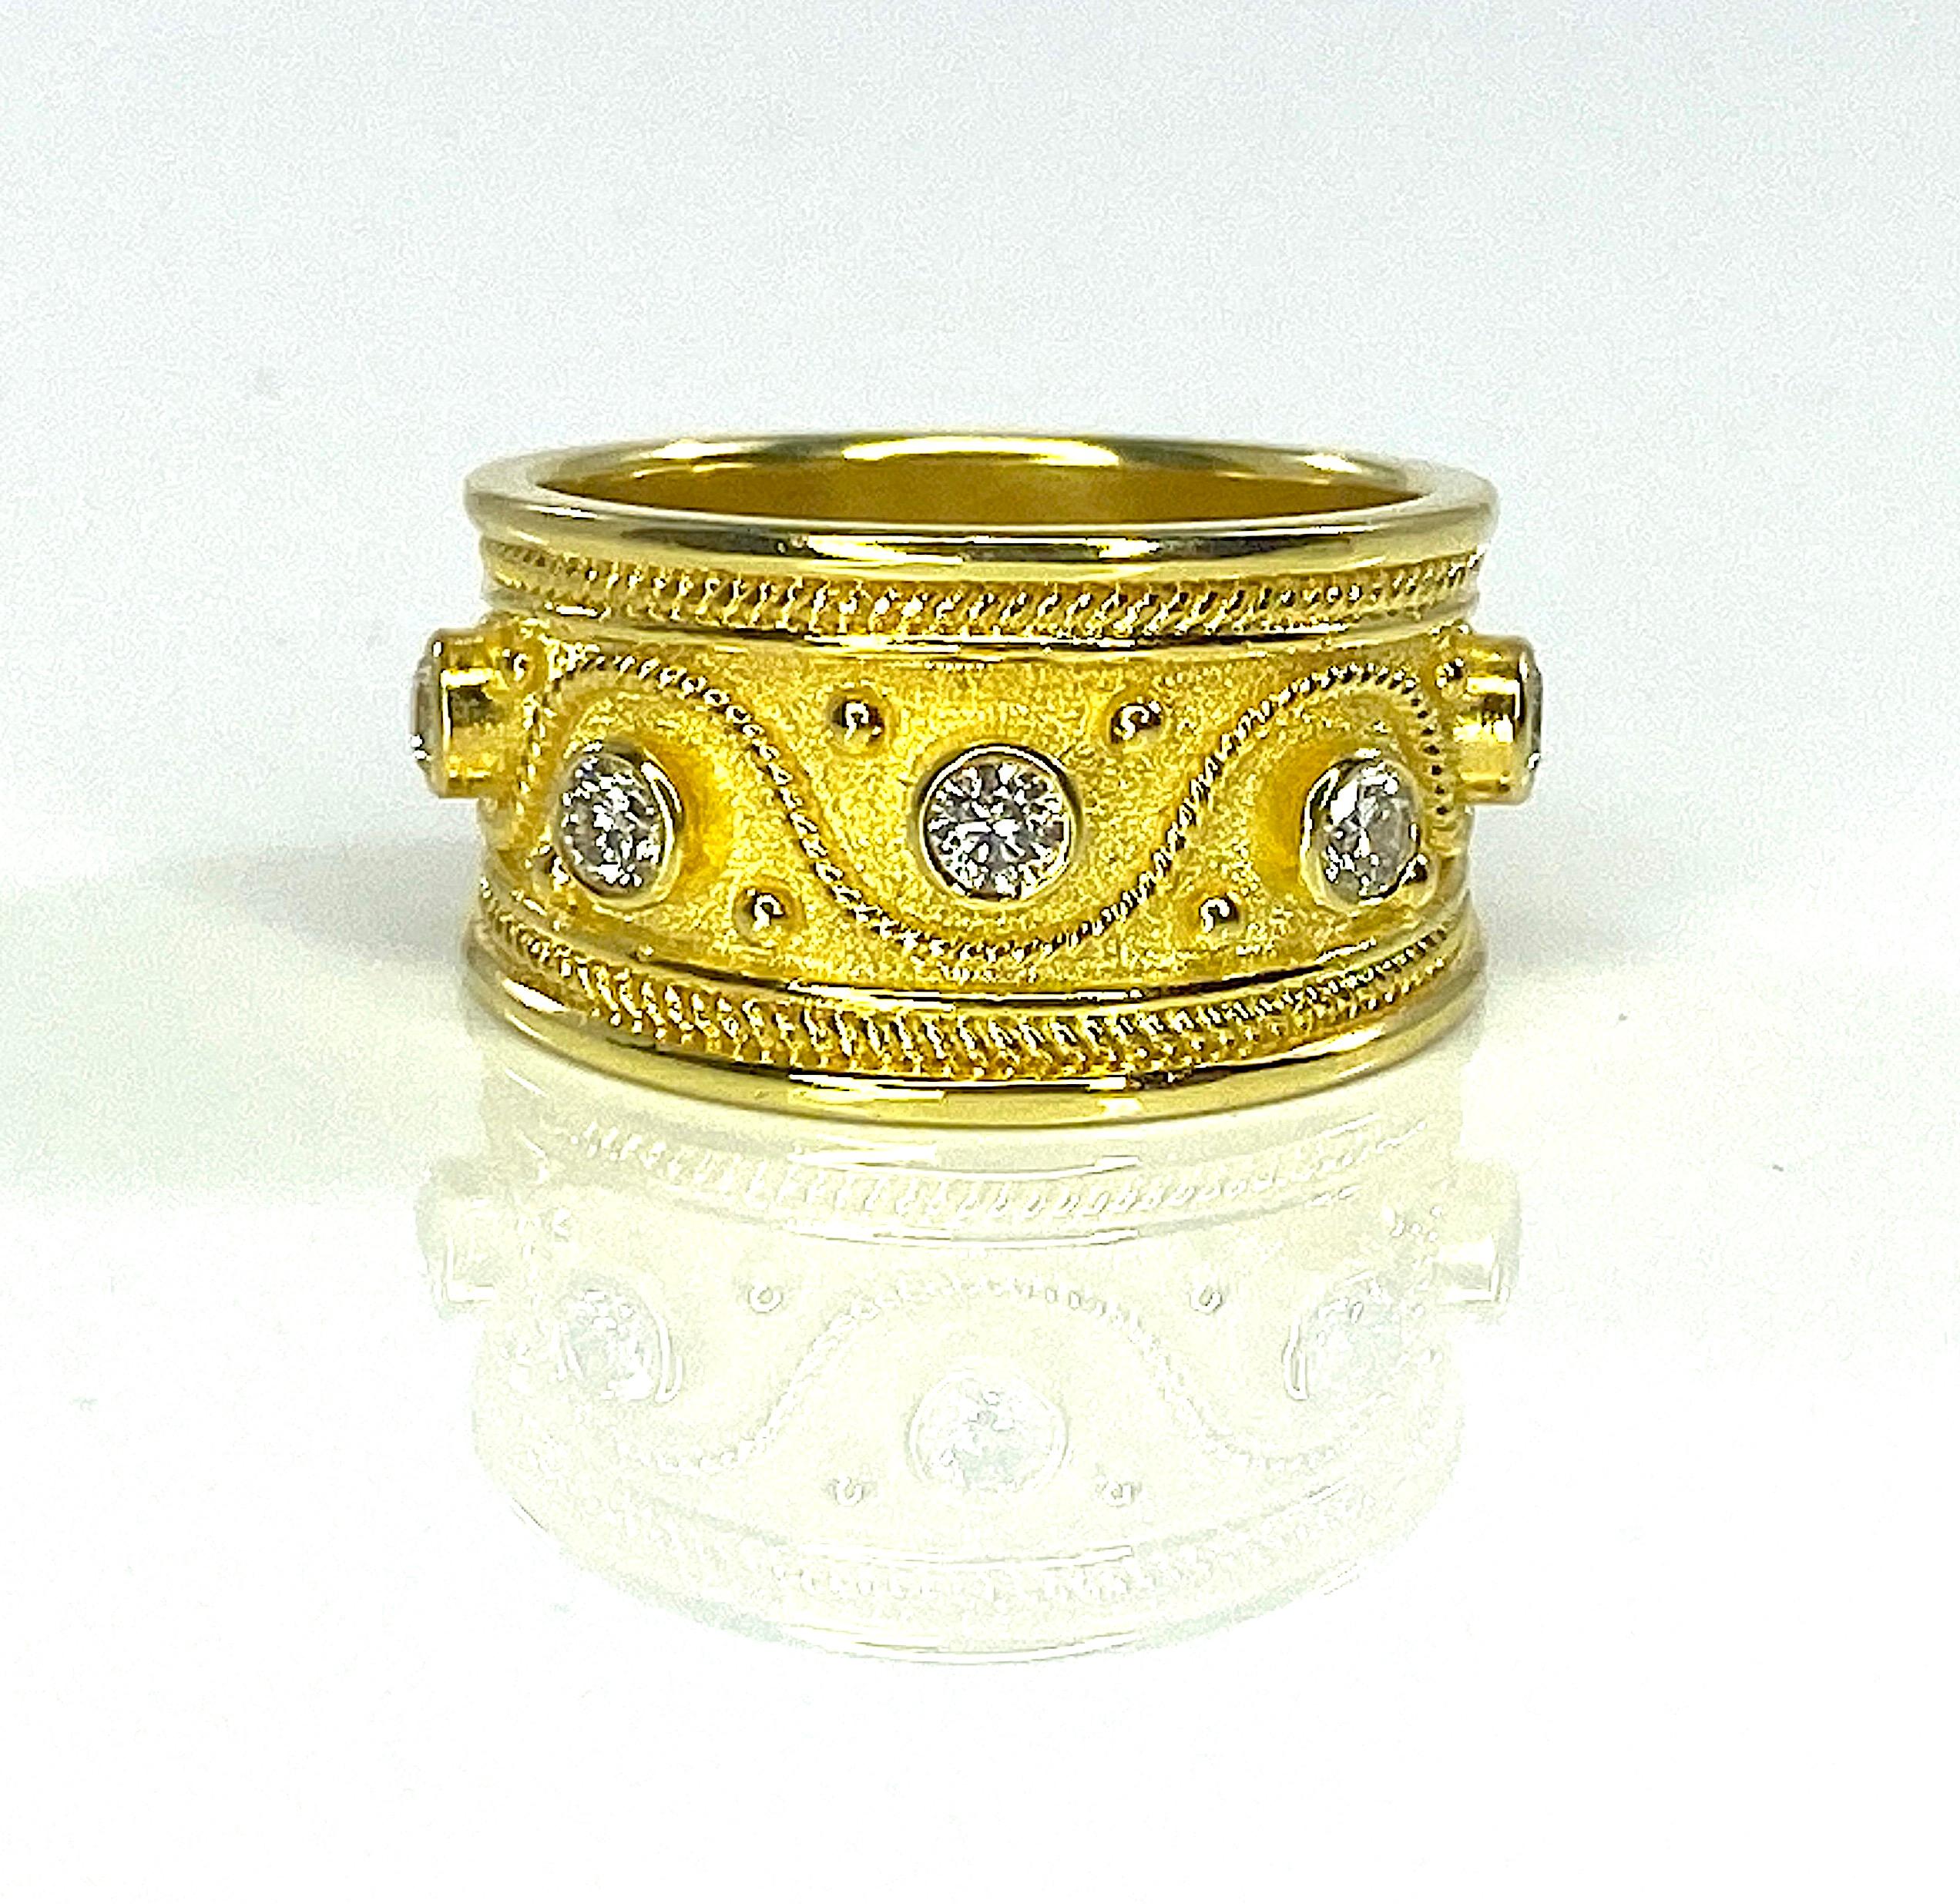 byzantine style ring